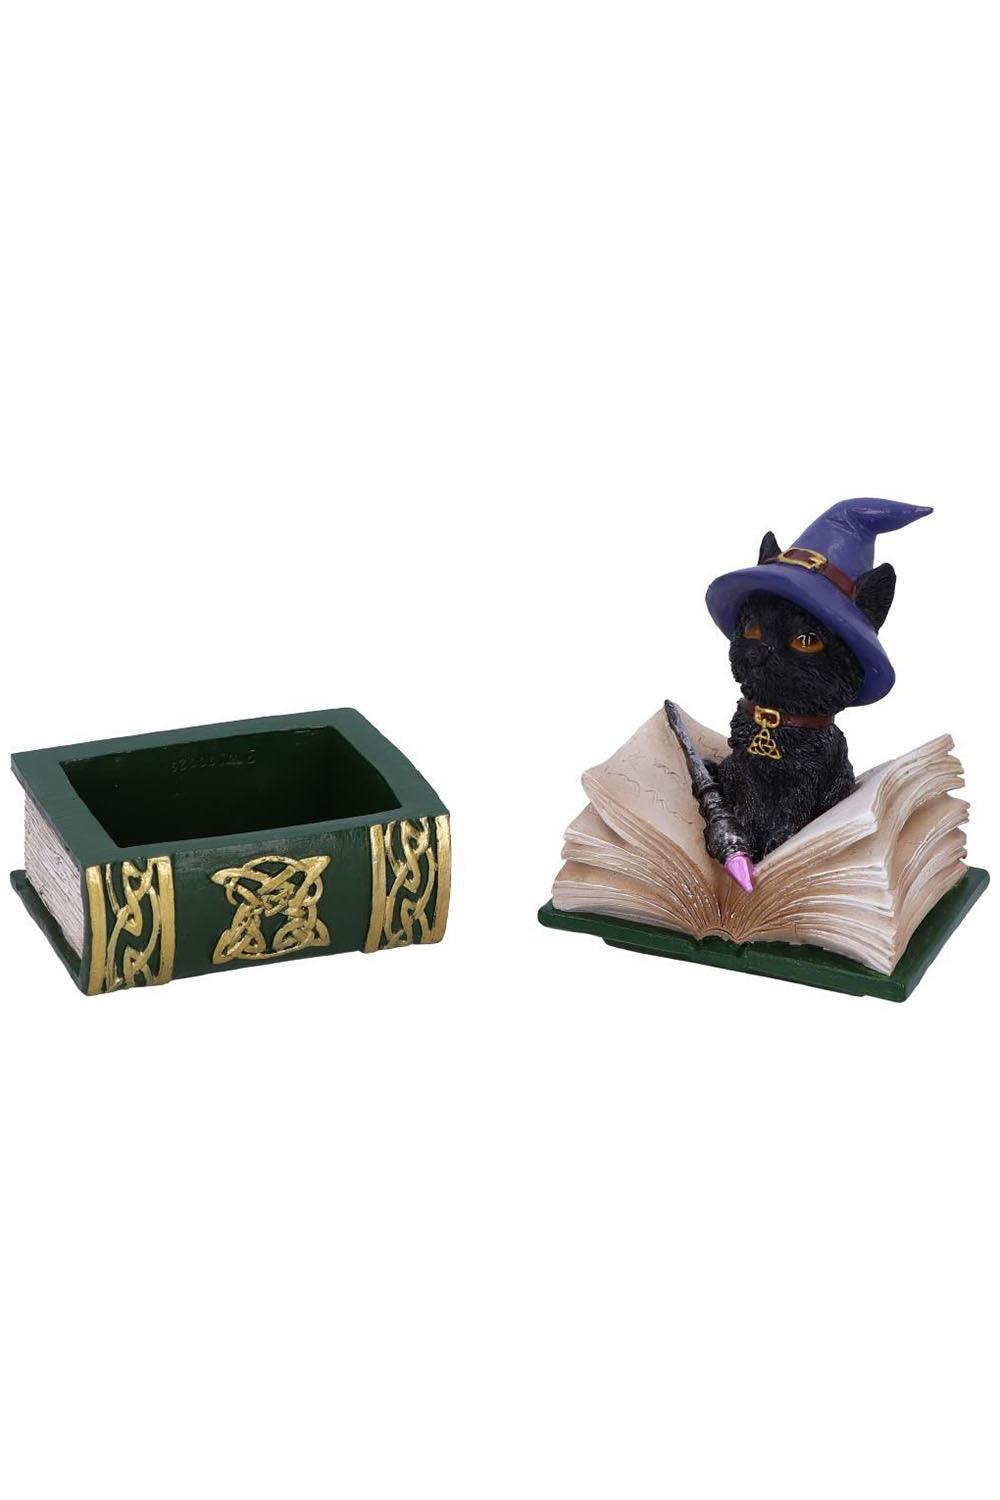 Nemesis Now Binx Witchy Black Cat with Spellbook Trinket Box - VampireFreaks